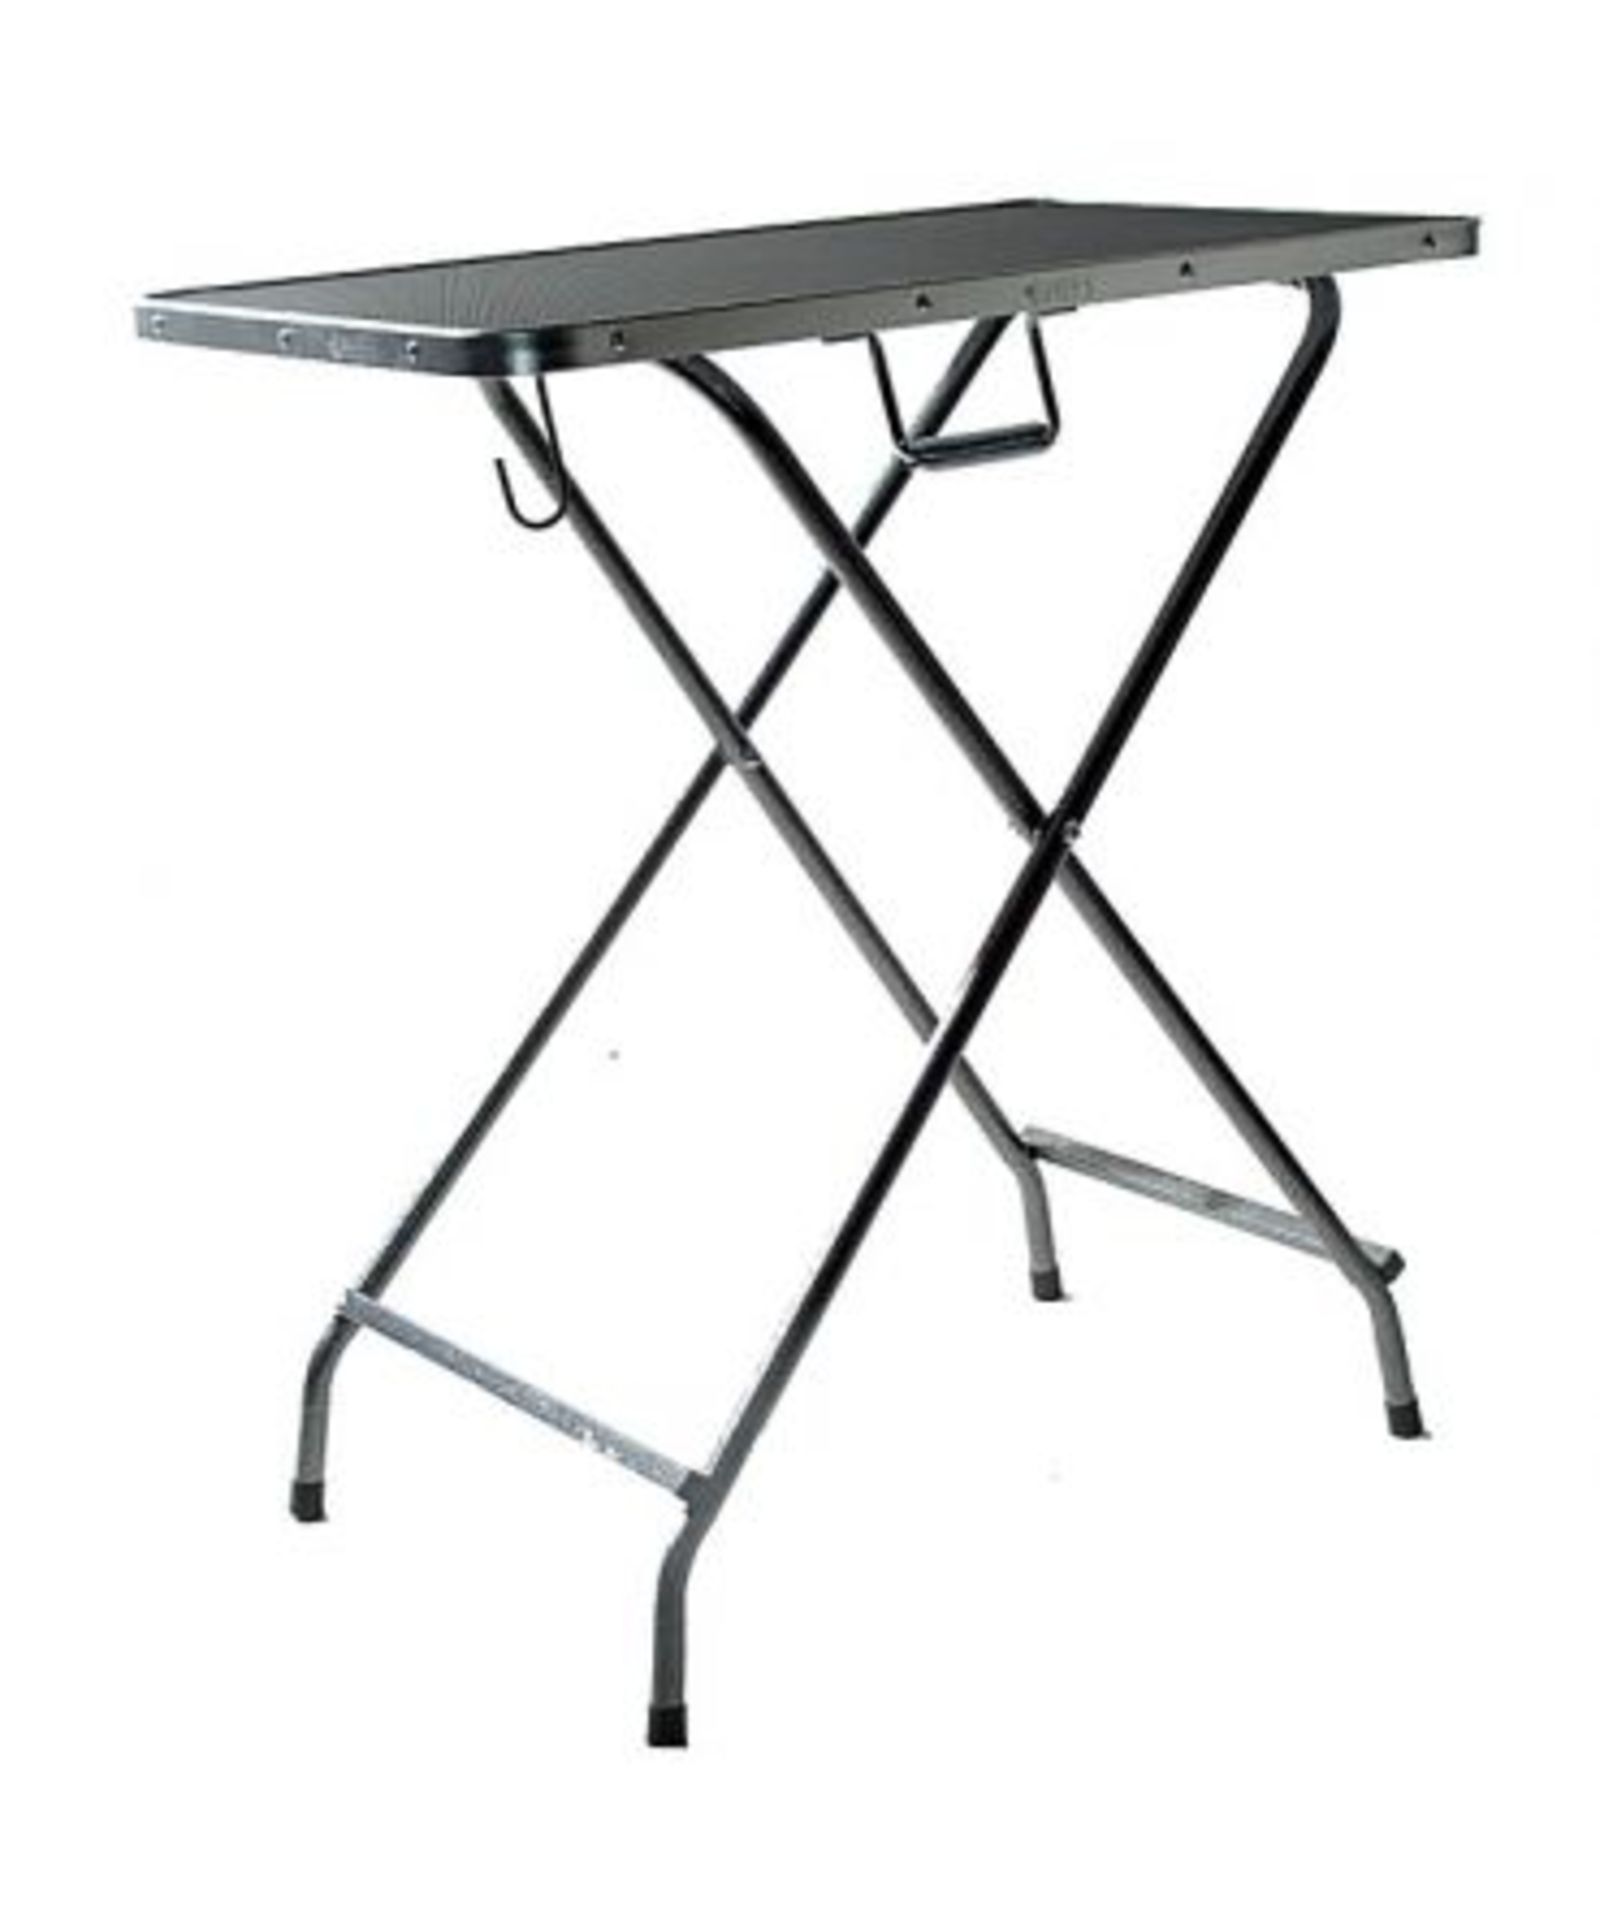 1 x Easy Fold Ringside Grooming Table | RRP £81.00